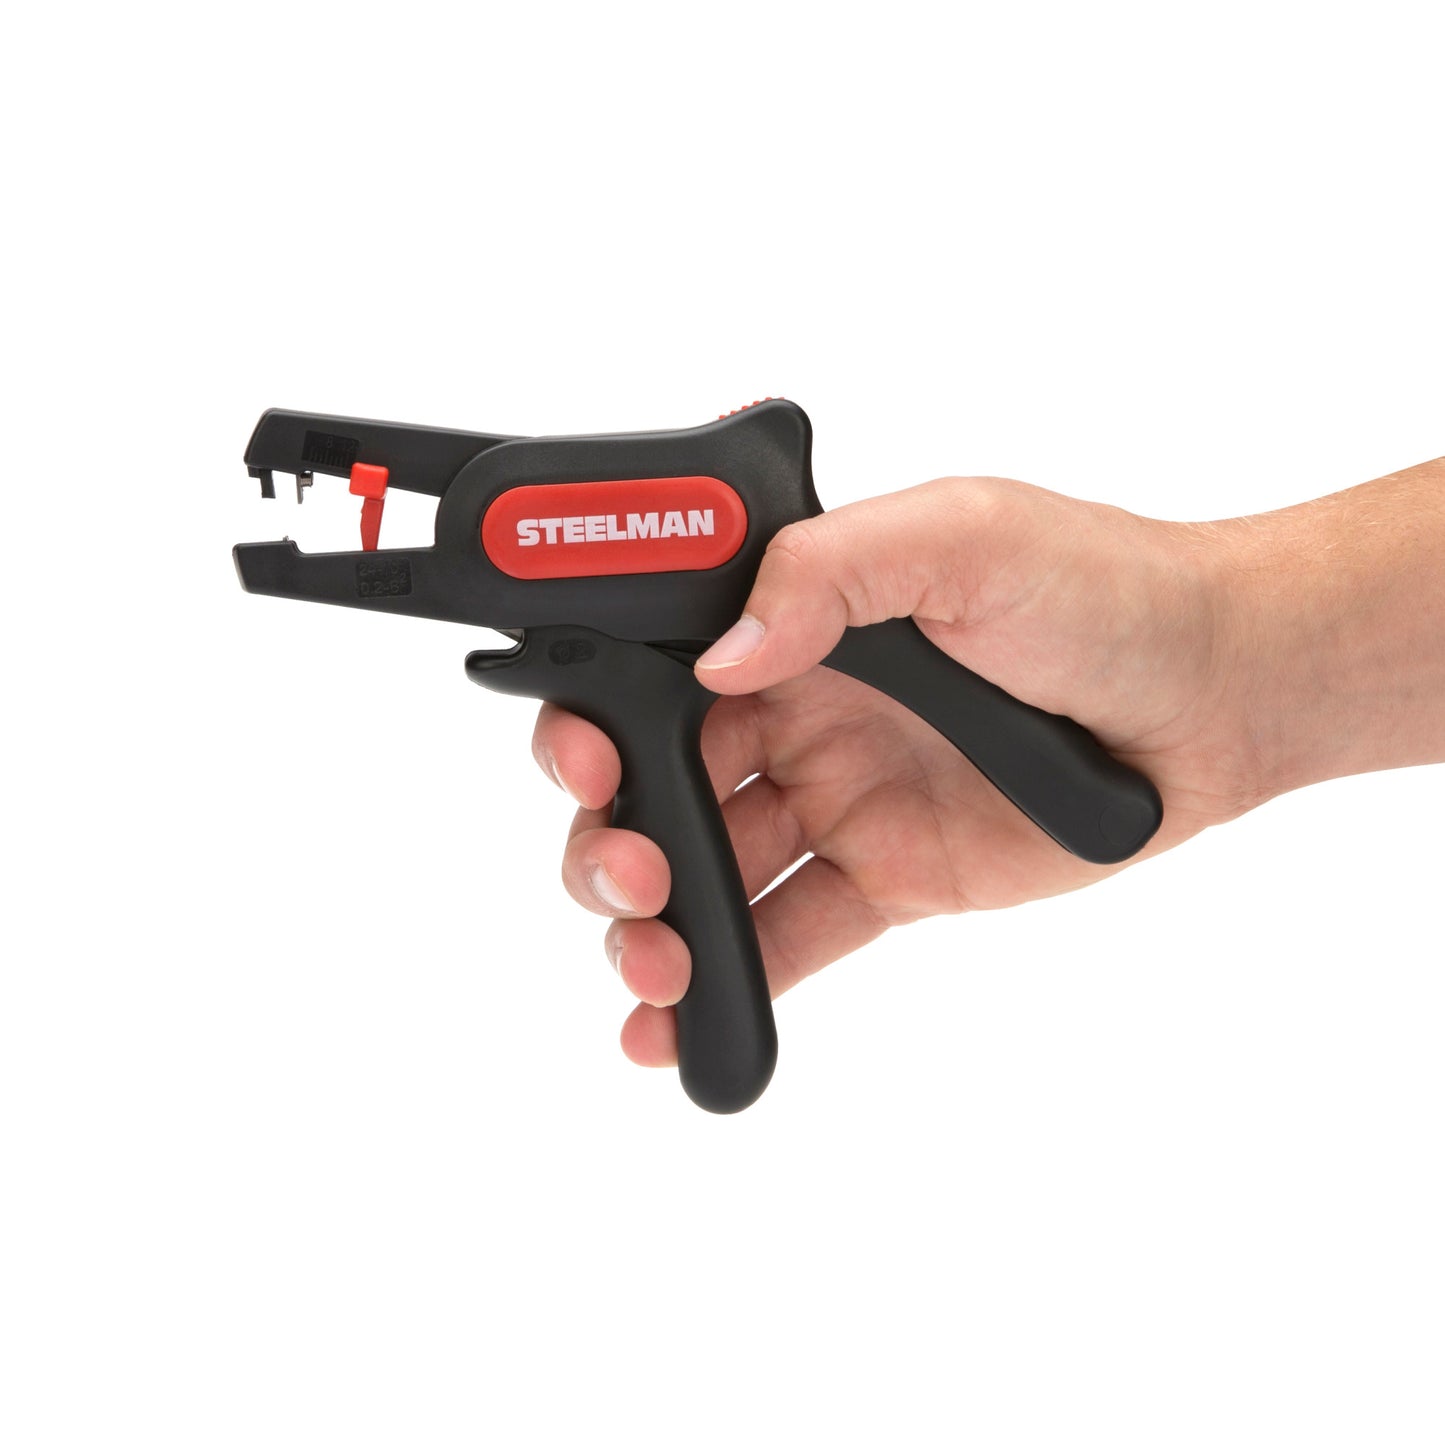 Self-Adjusting Pistol Grip Wire Stripper and Cutter